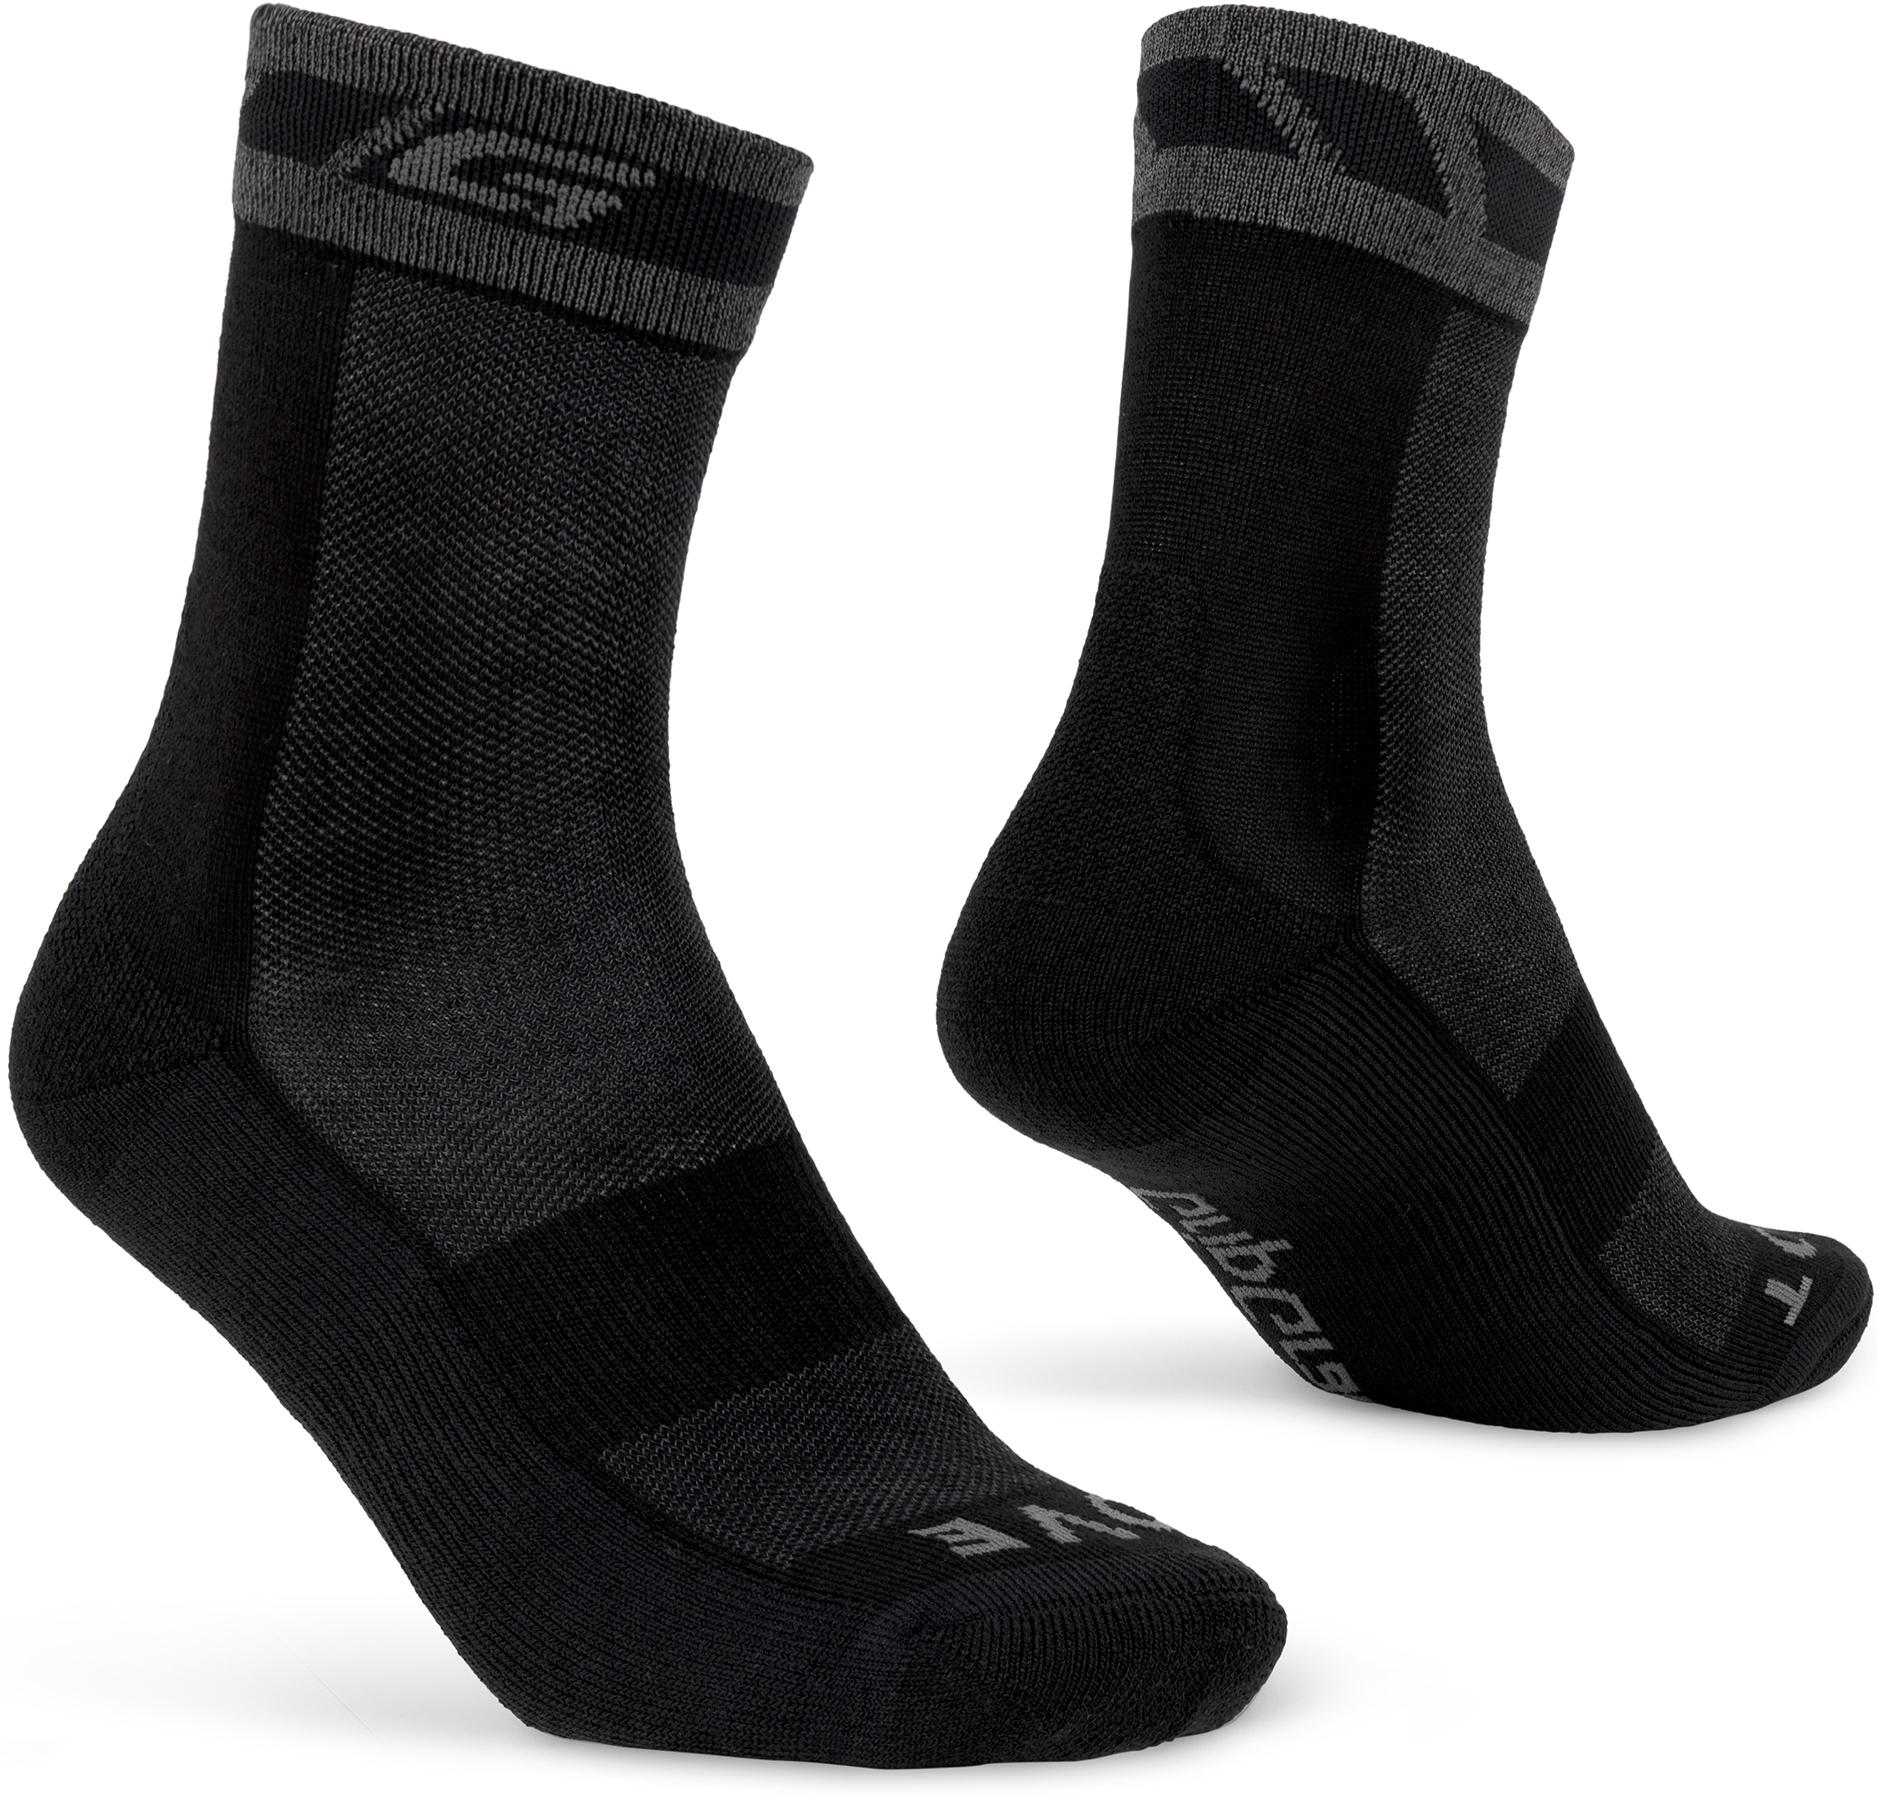 Gripgrab Merino Winter Socks - Black